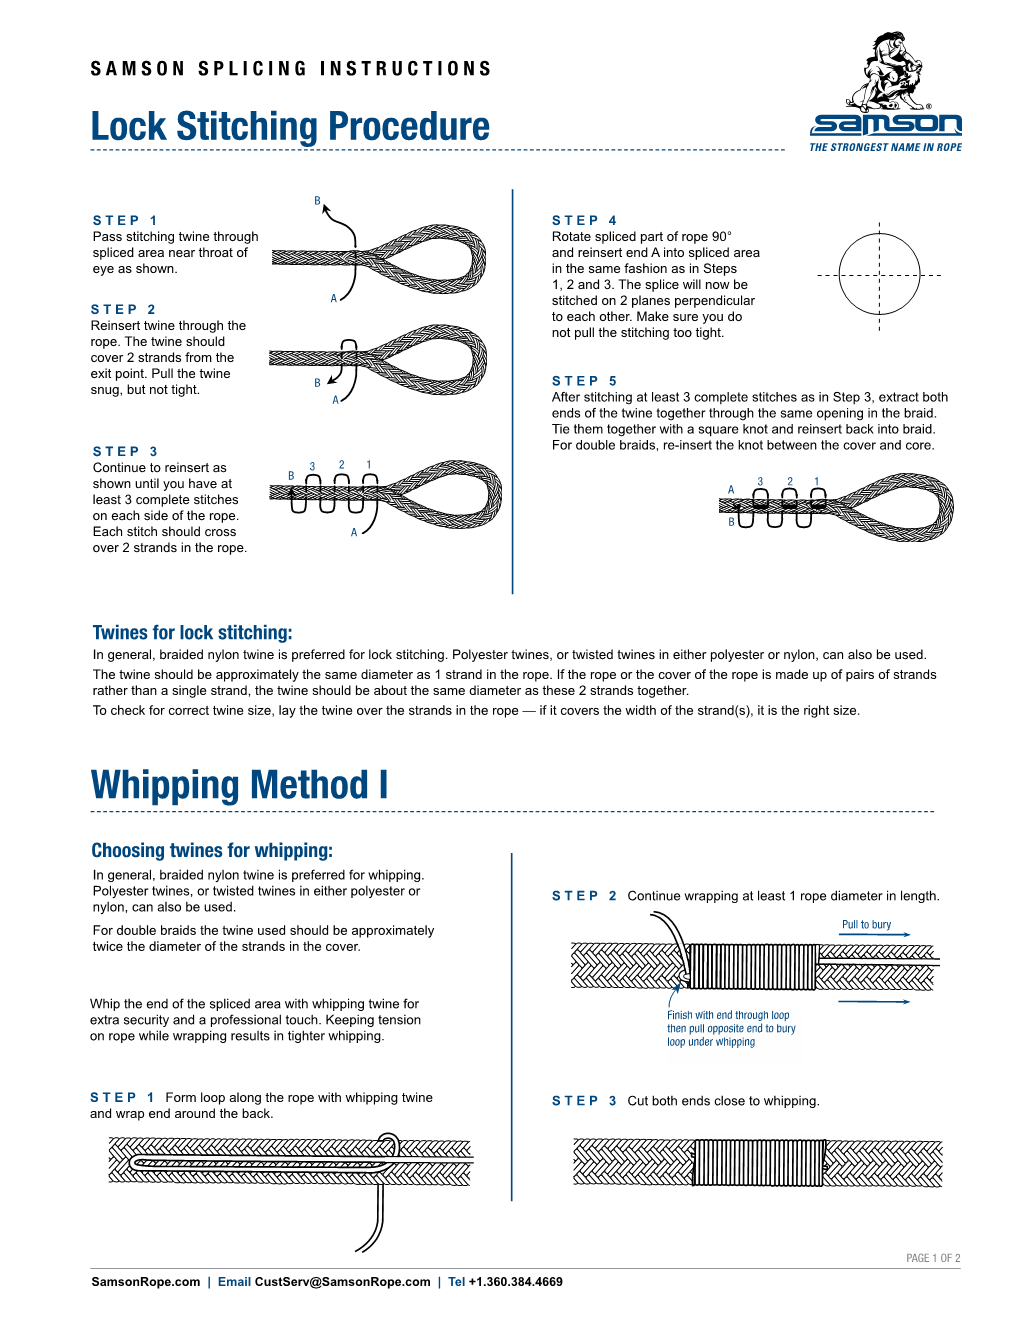 Lock Stitching Procedure Whipping Method I